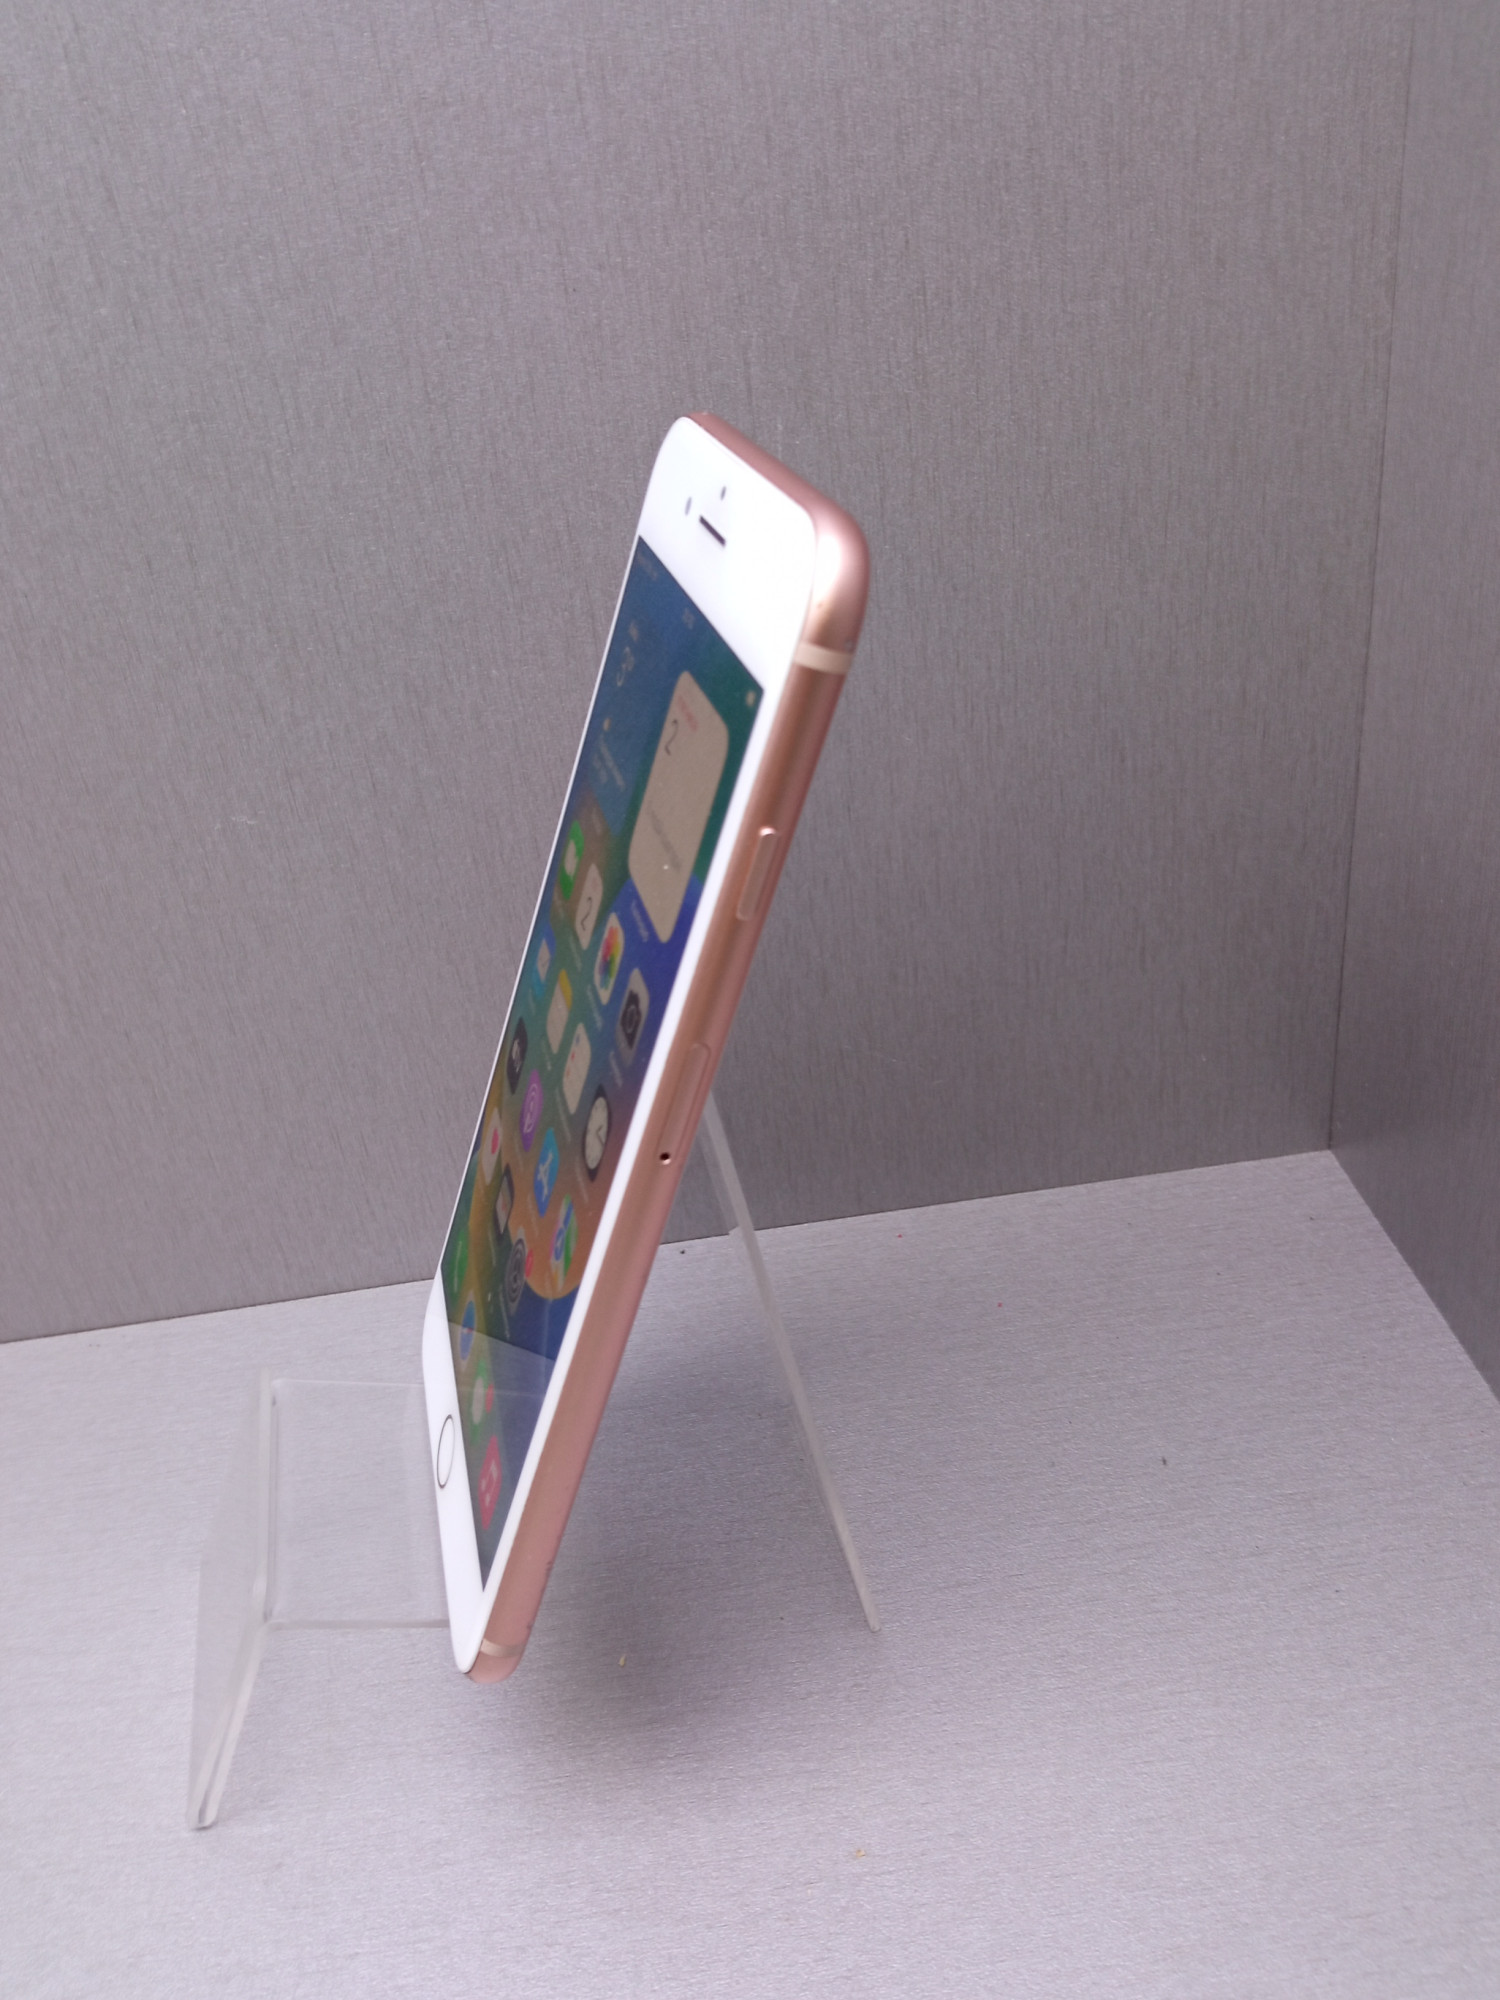 Apple iPhone 8 Plus 64Gb Gold (MQ8N2) 13